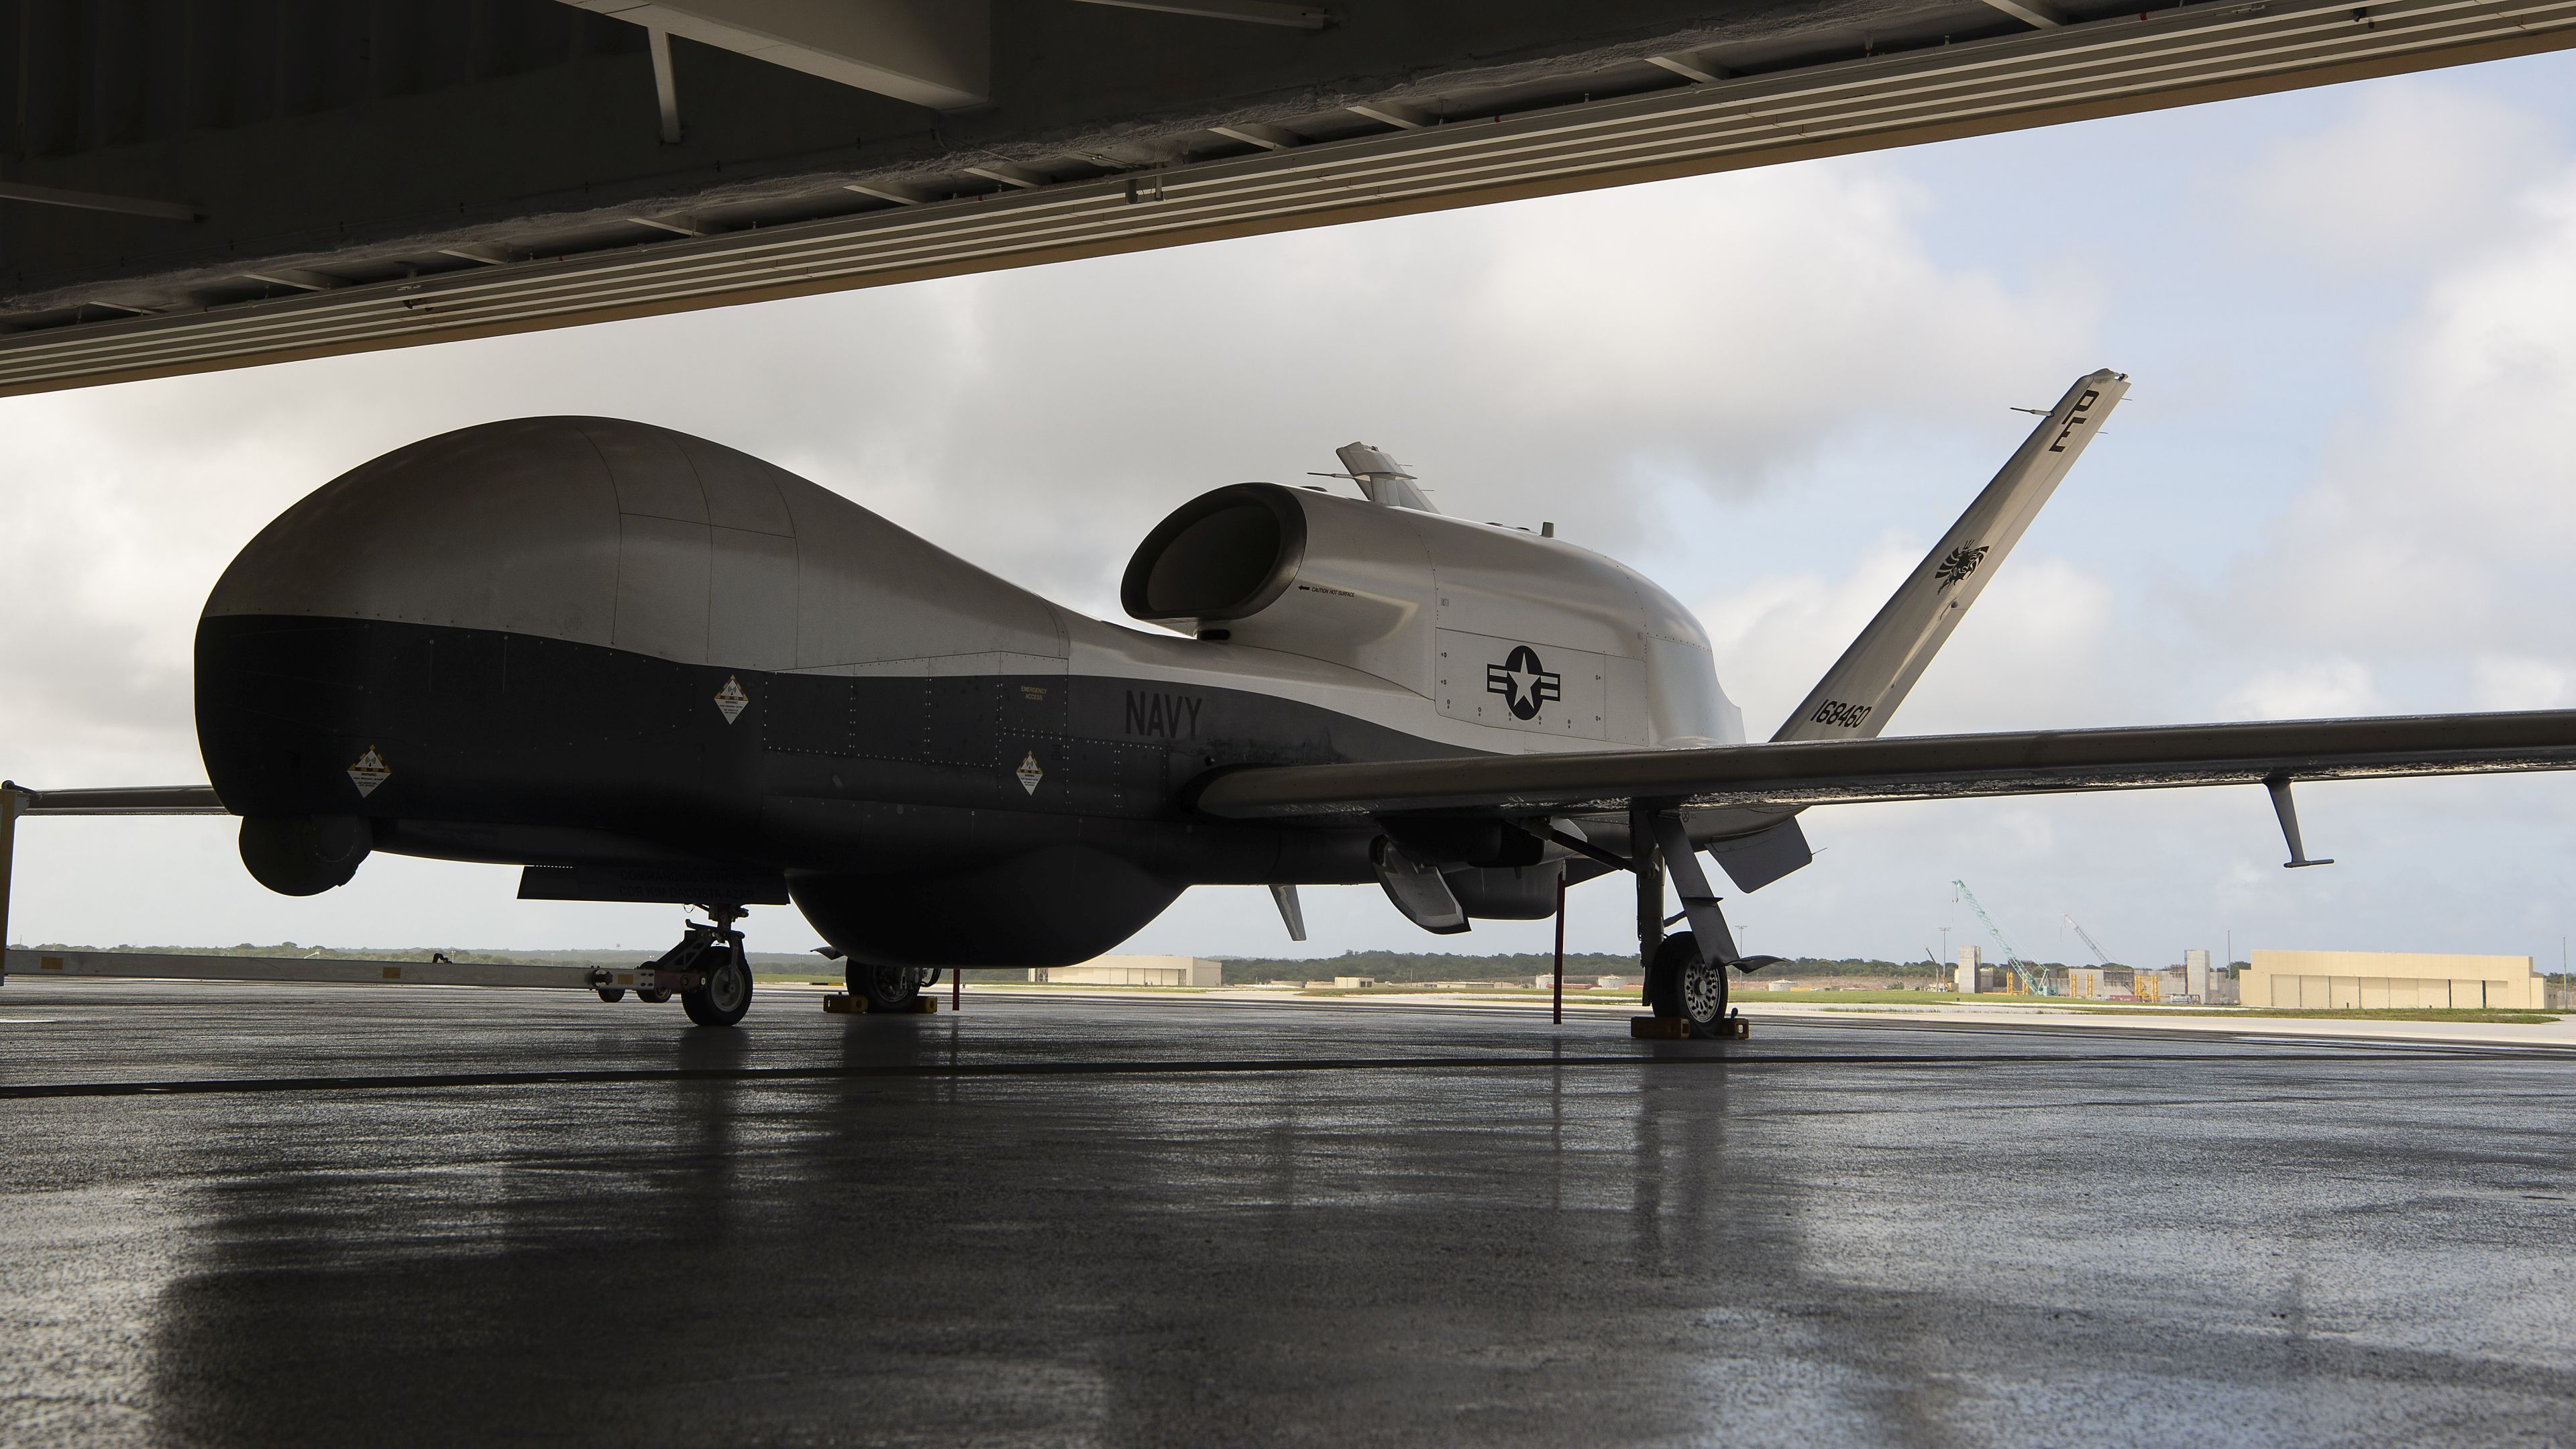 MQ-4C Triton Unmanned Aircraft System (UAS) Guam